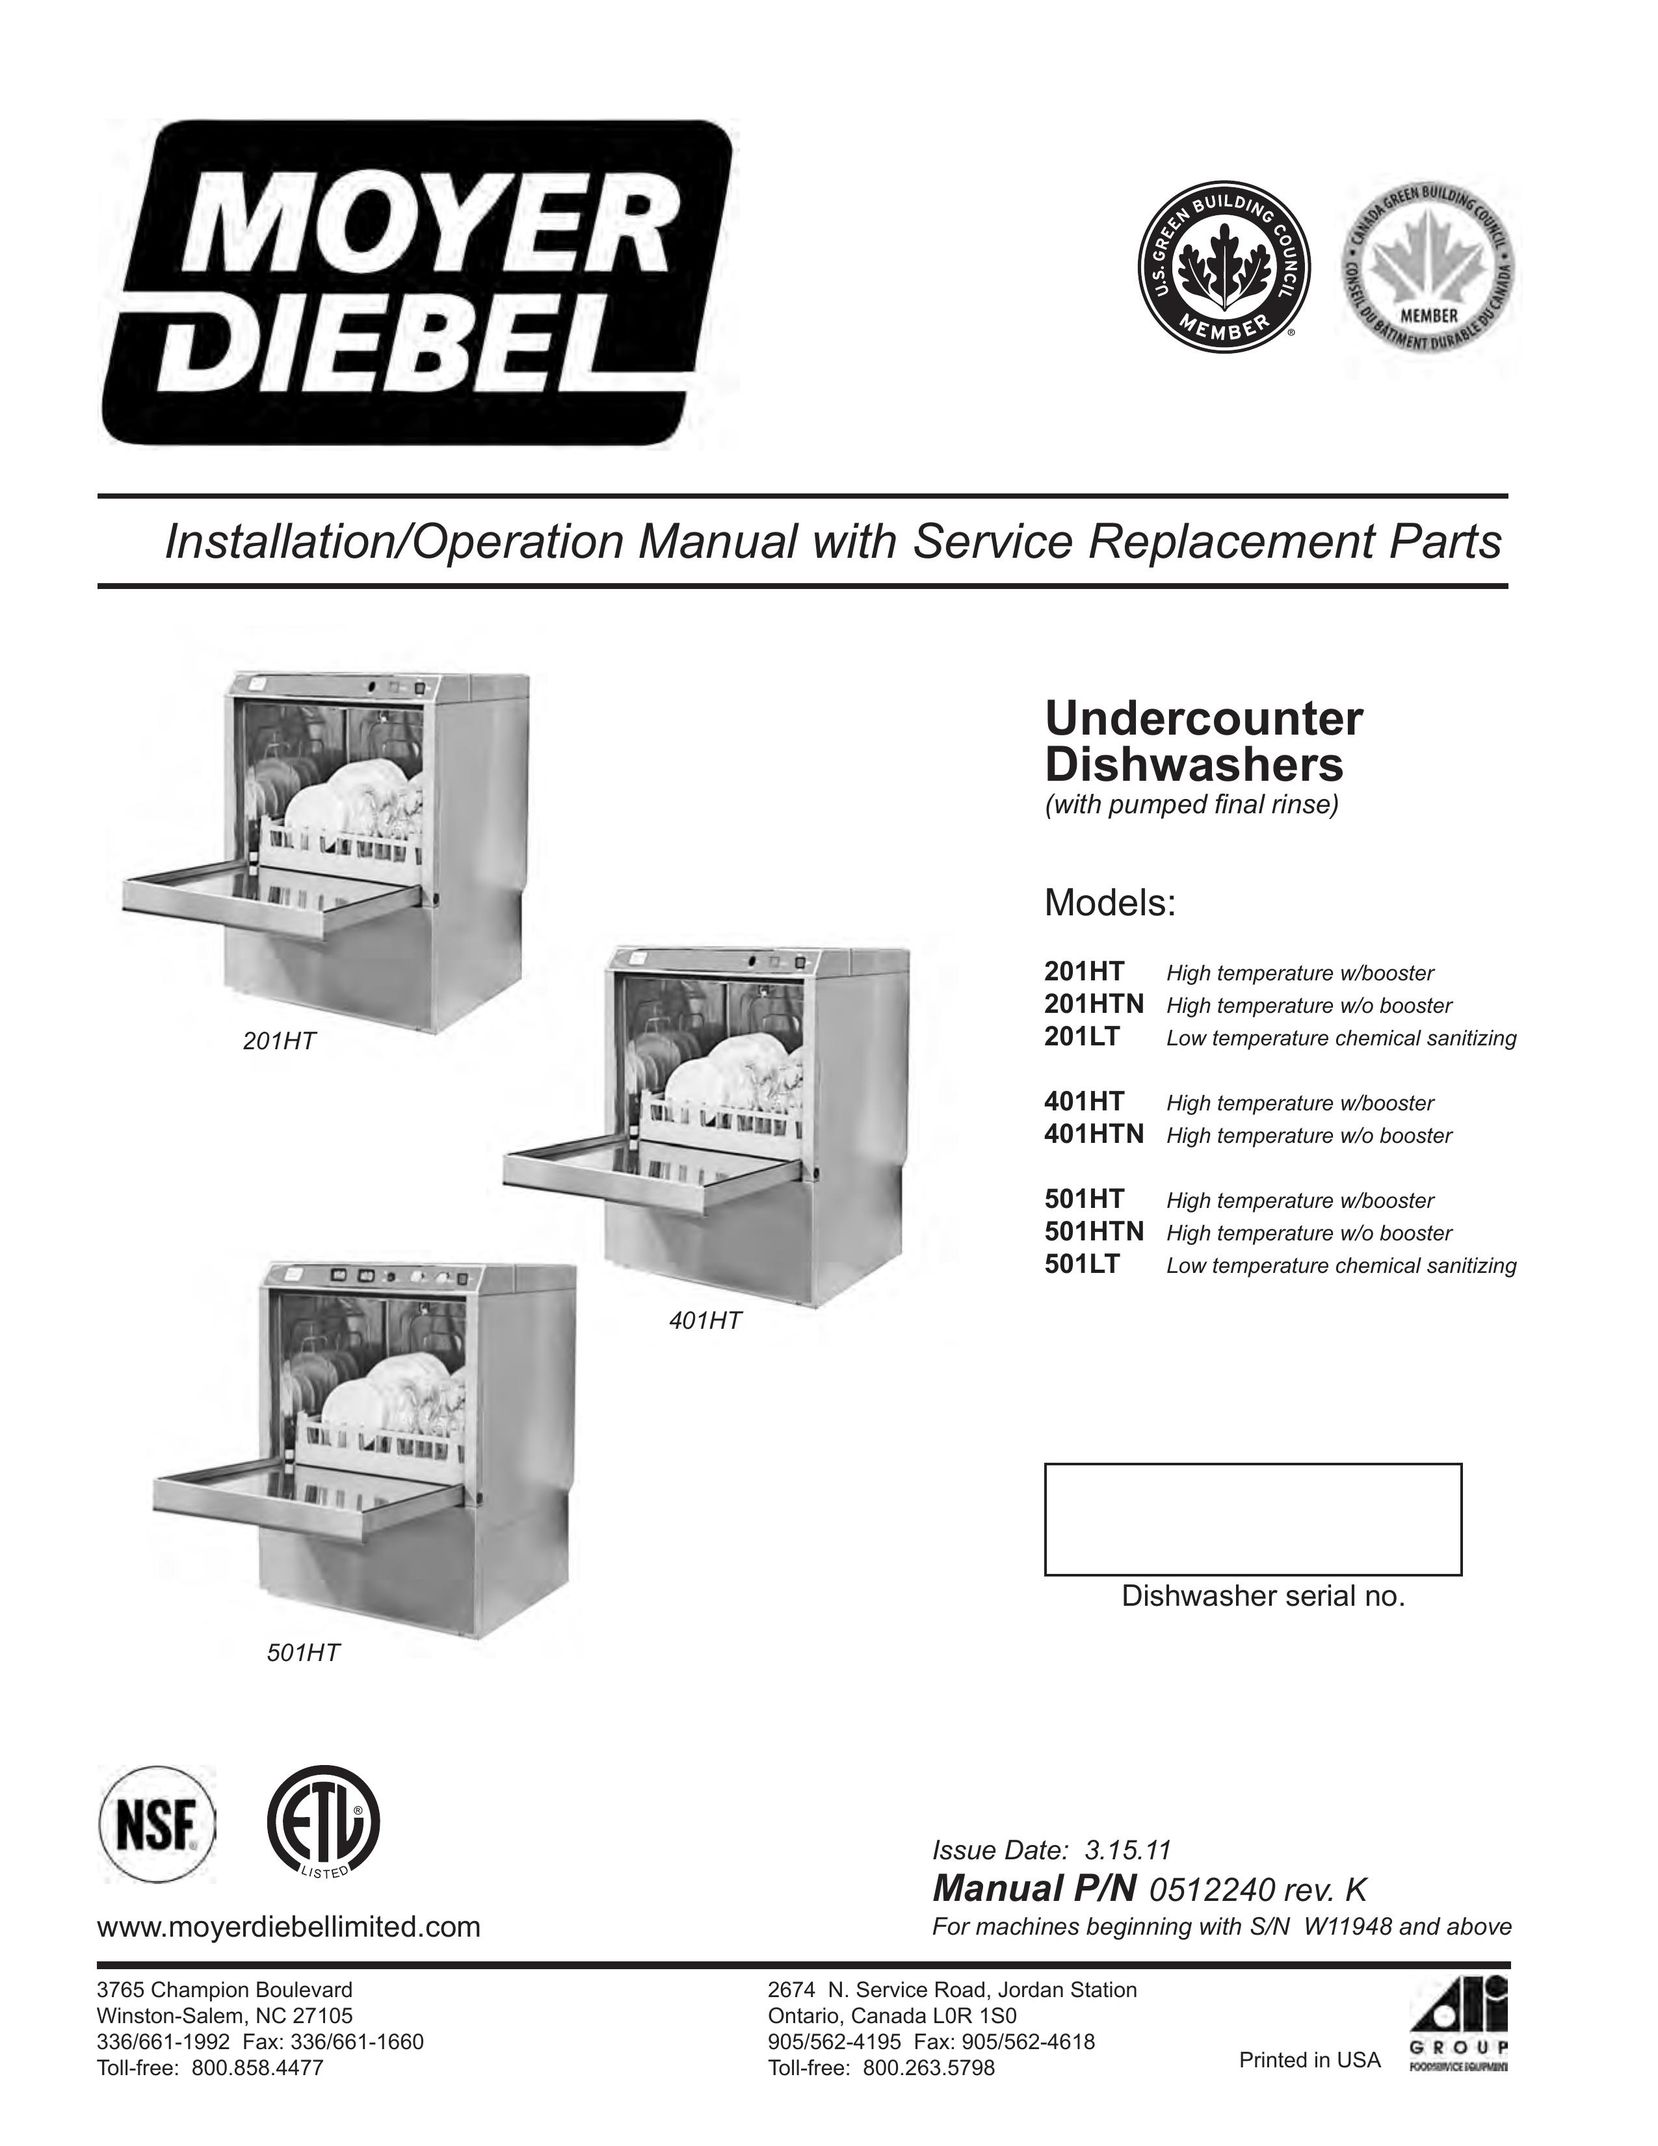 Moyer Diebel 401HTN Dishwasher User Manual